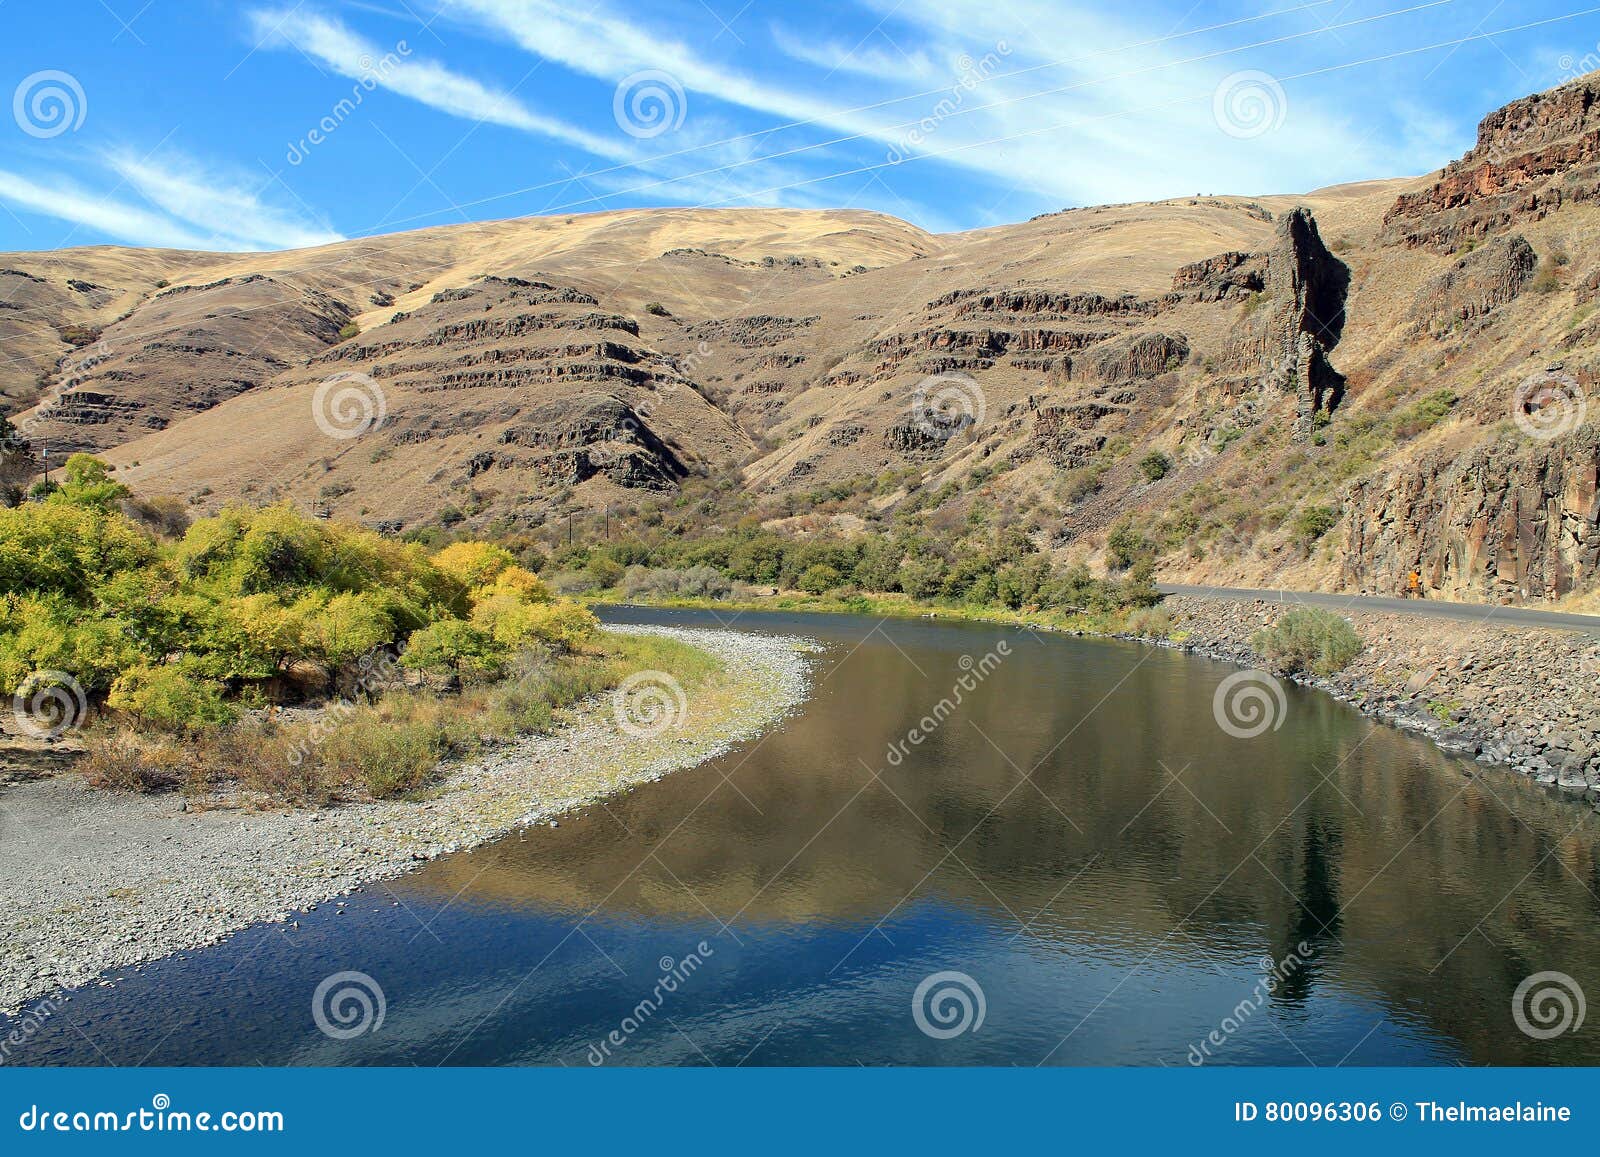 grande ronde river meandering through rocky hillsides